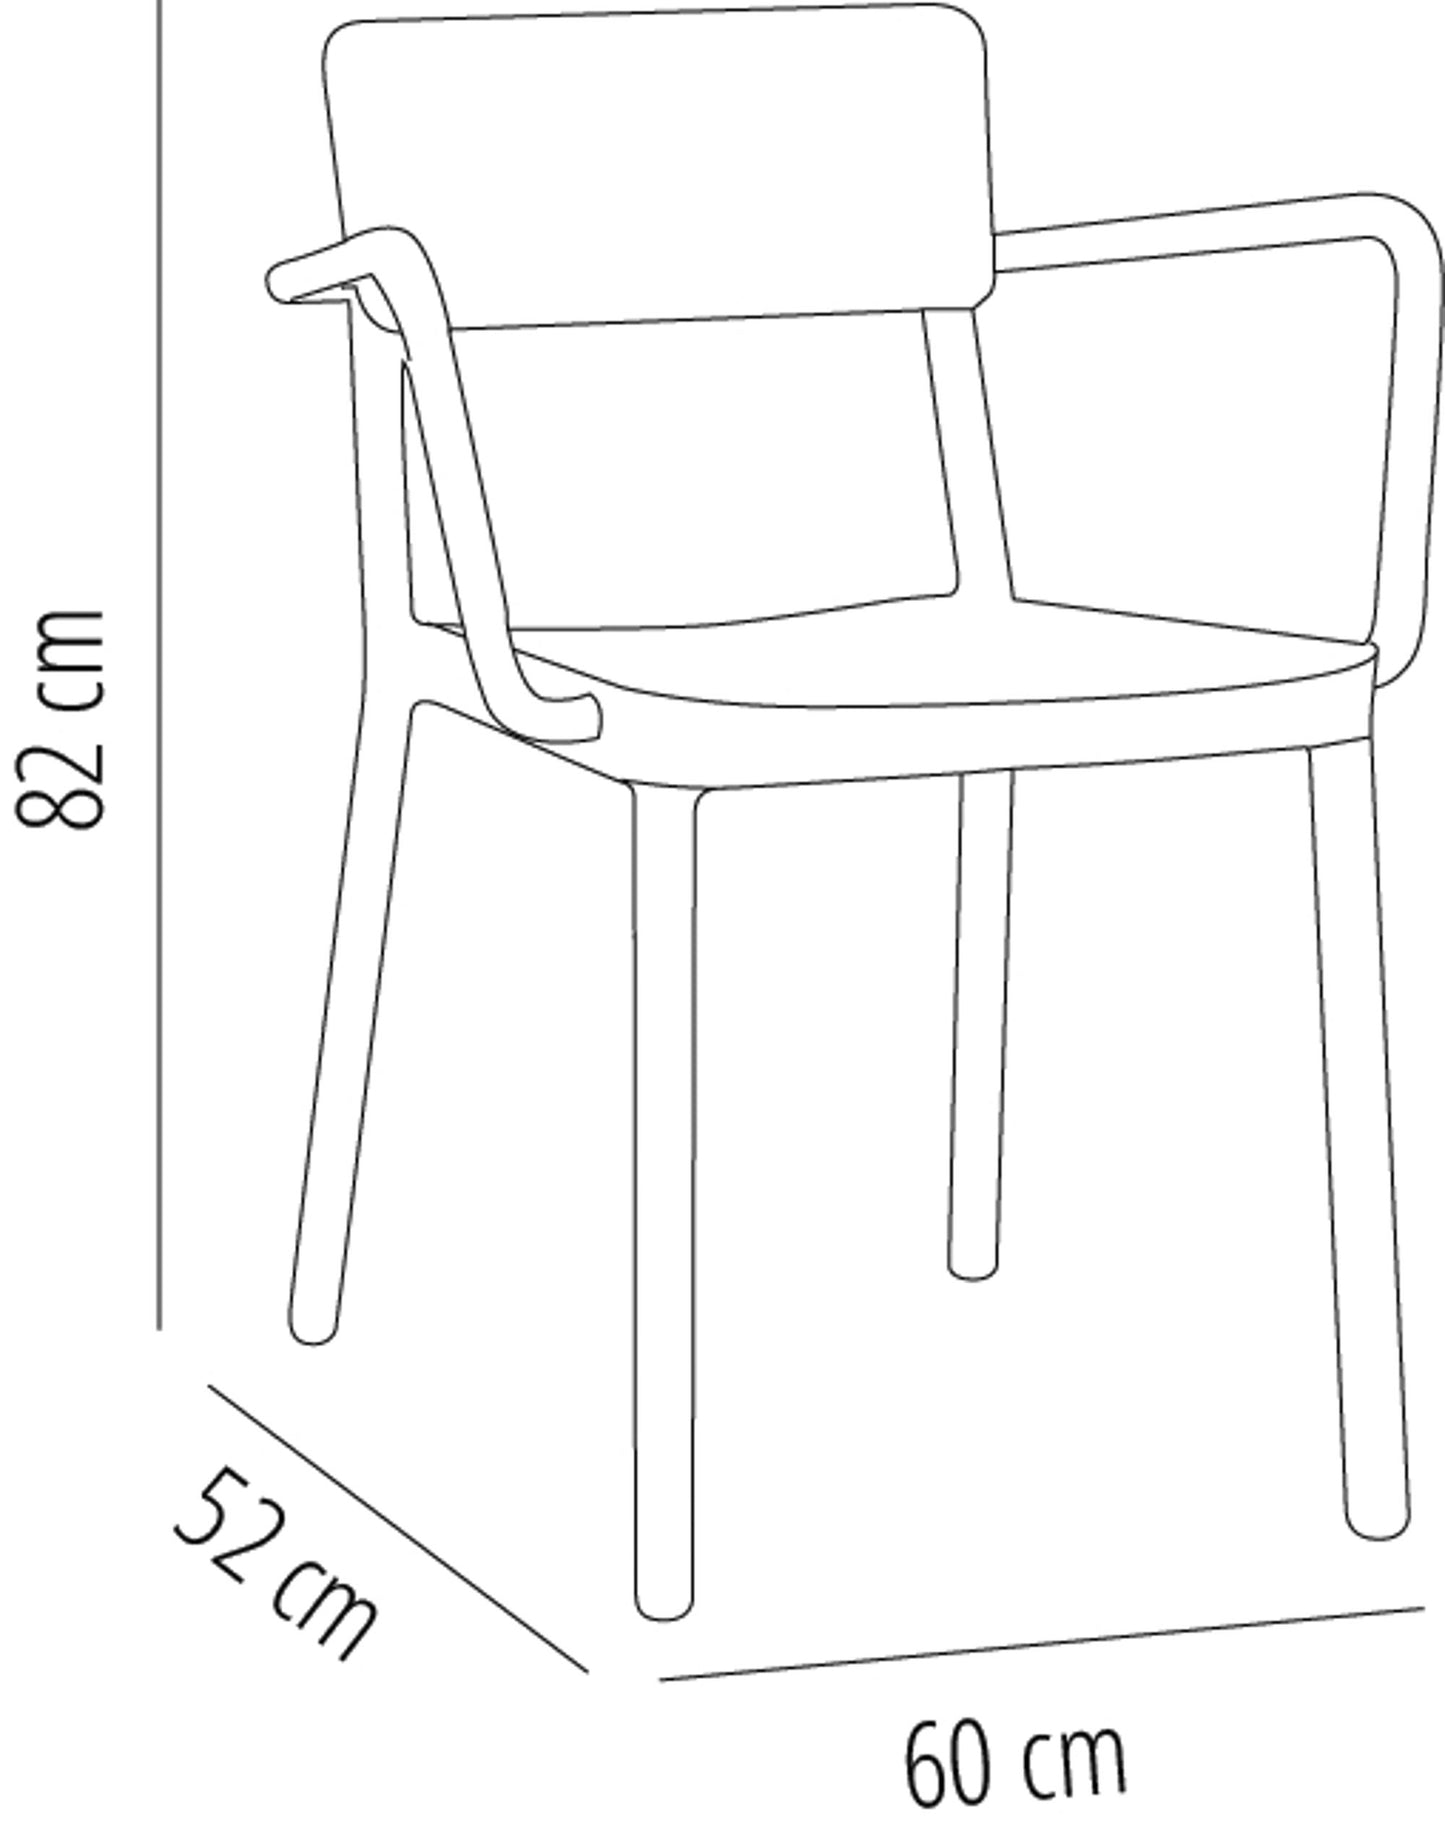 Resol lisboa set 2 silla con brazos interior, exterior arena